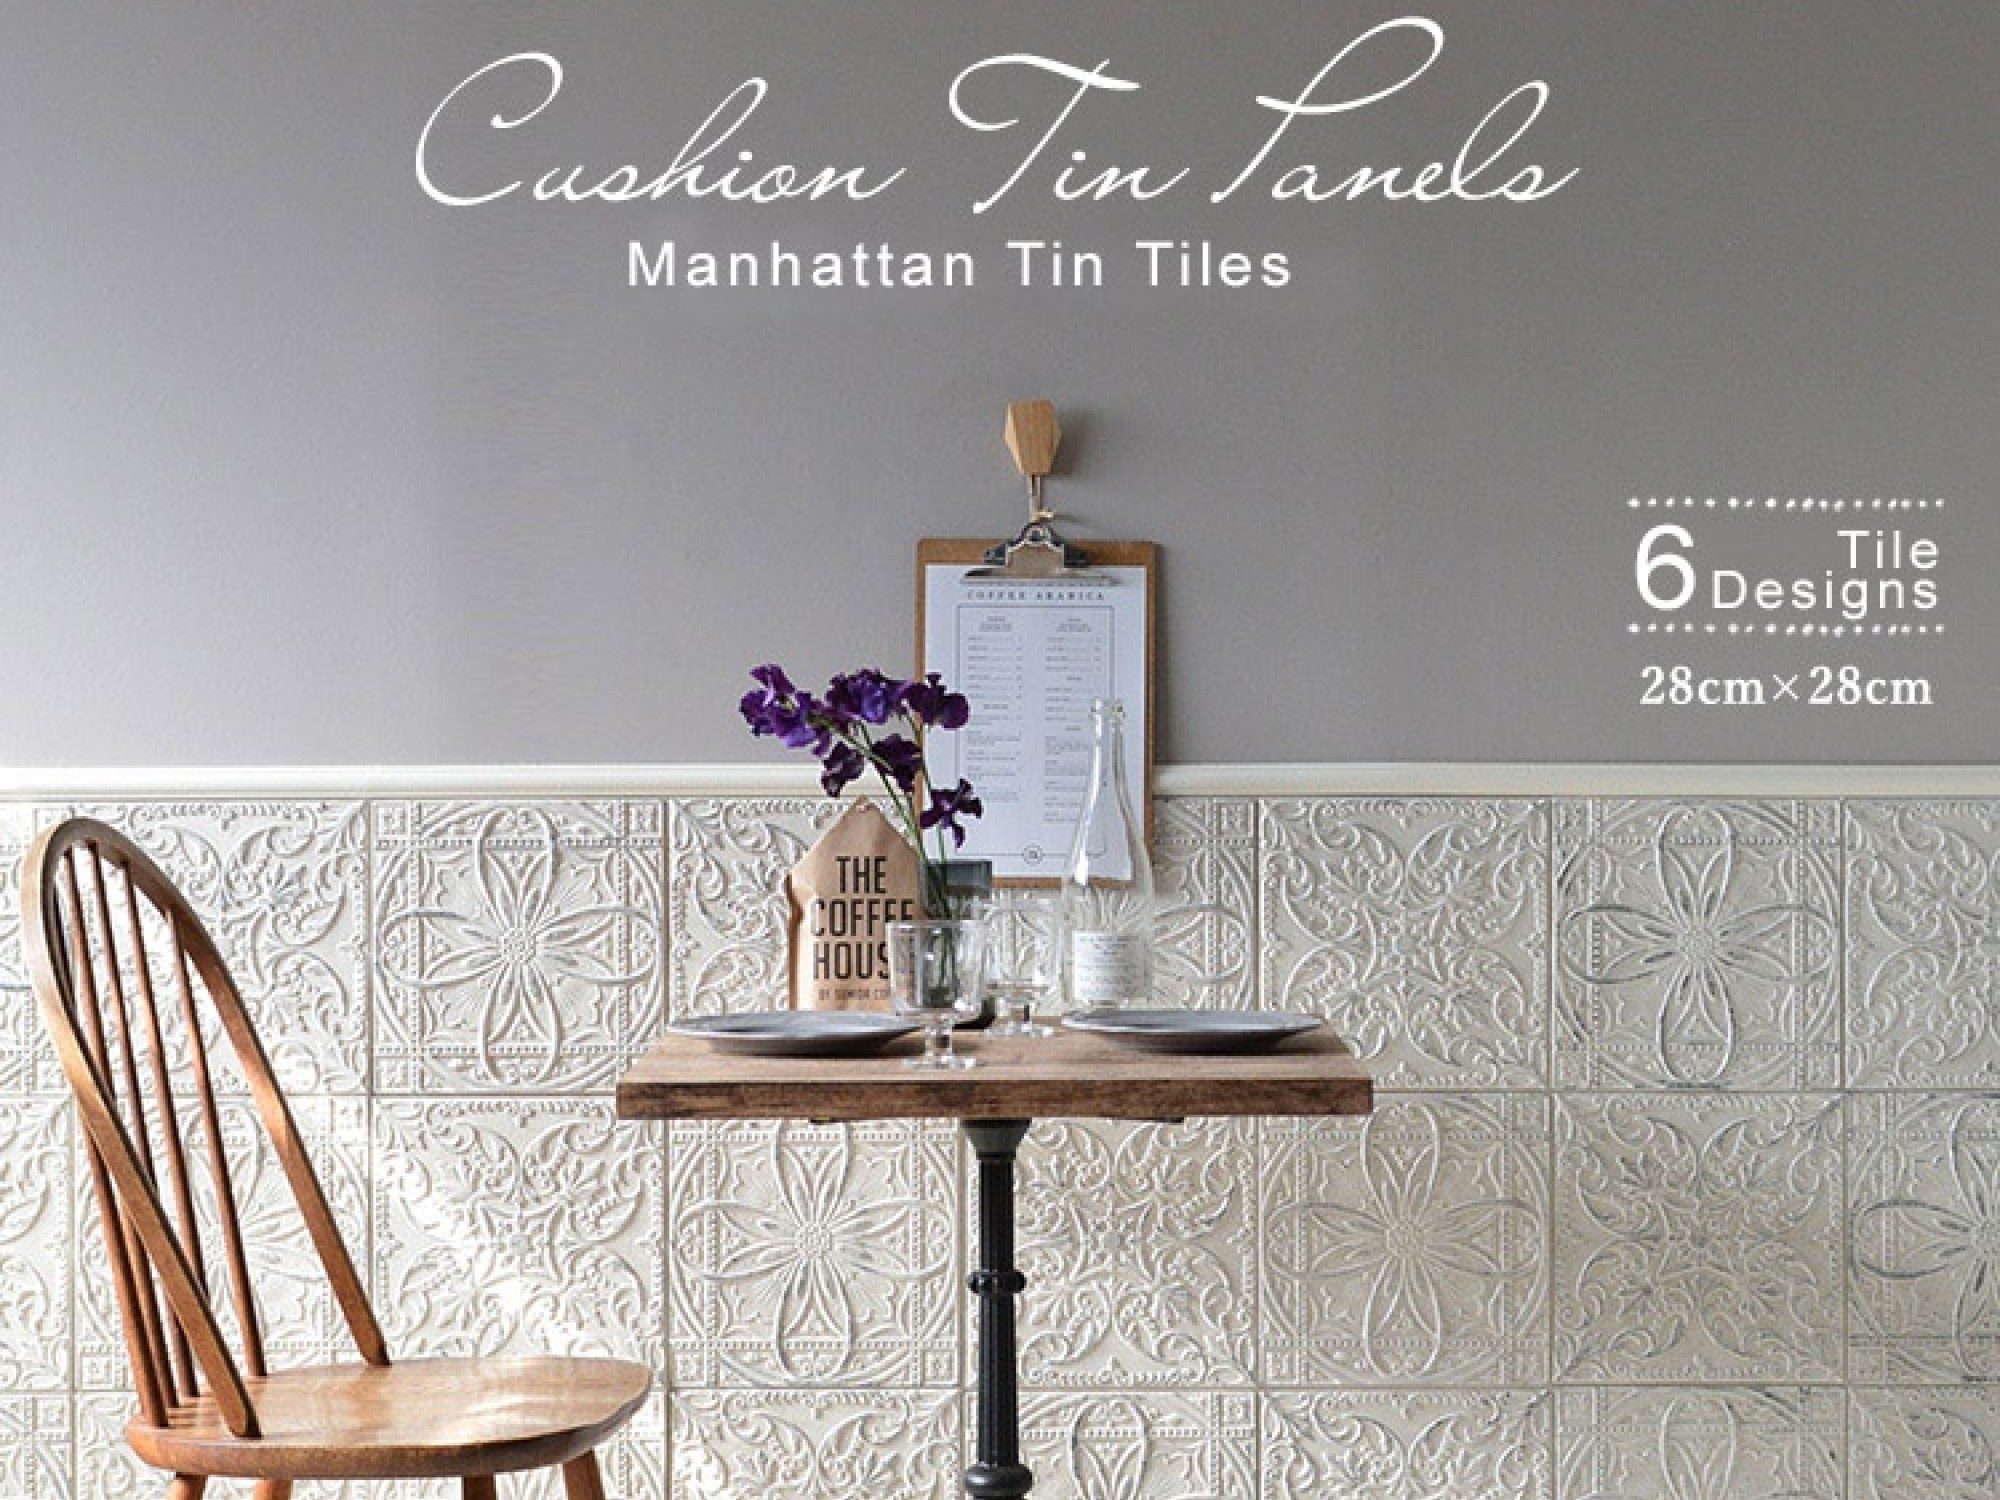 Cushion Tin Panels - Self Adhesive Tiles